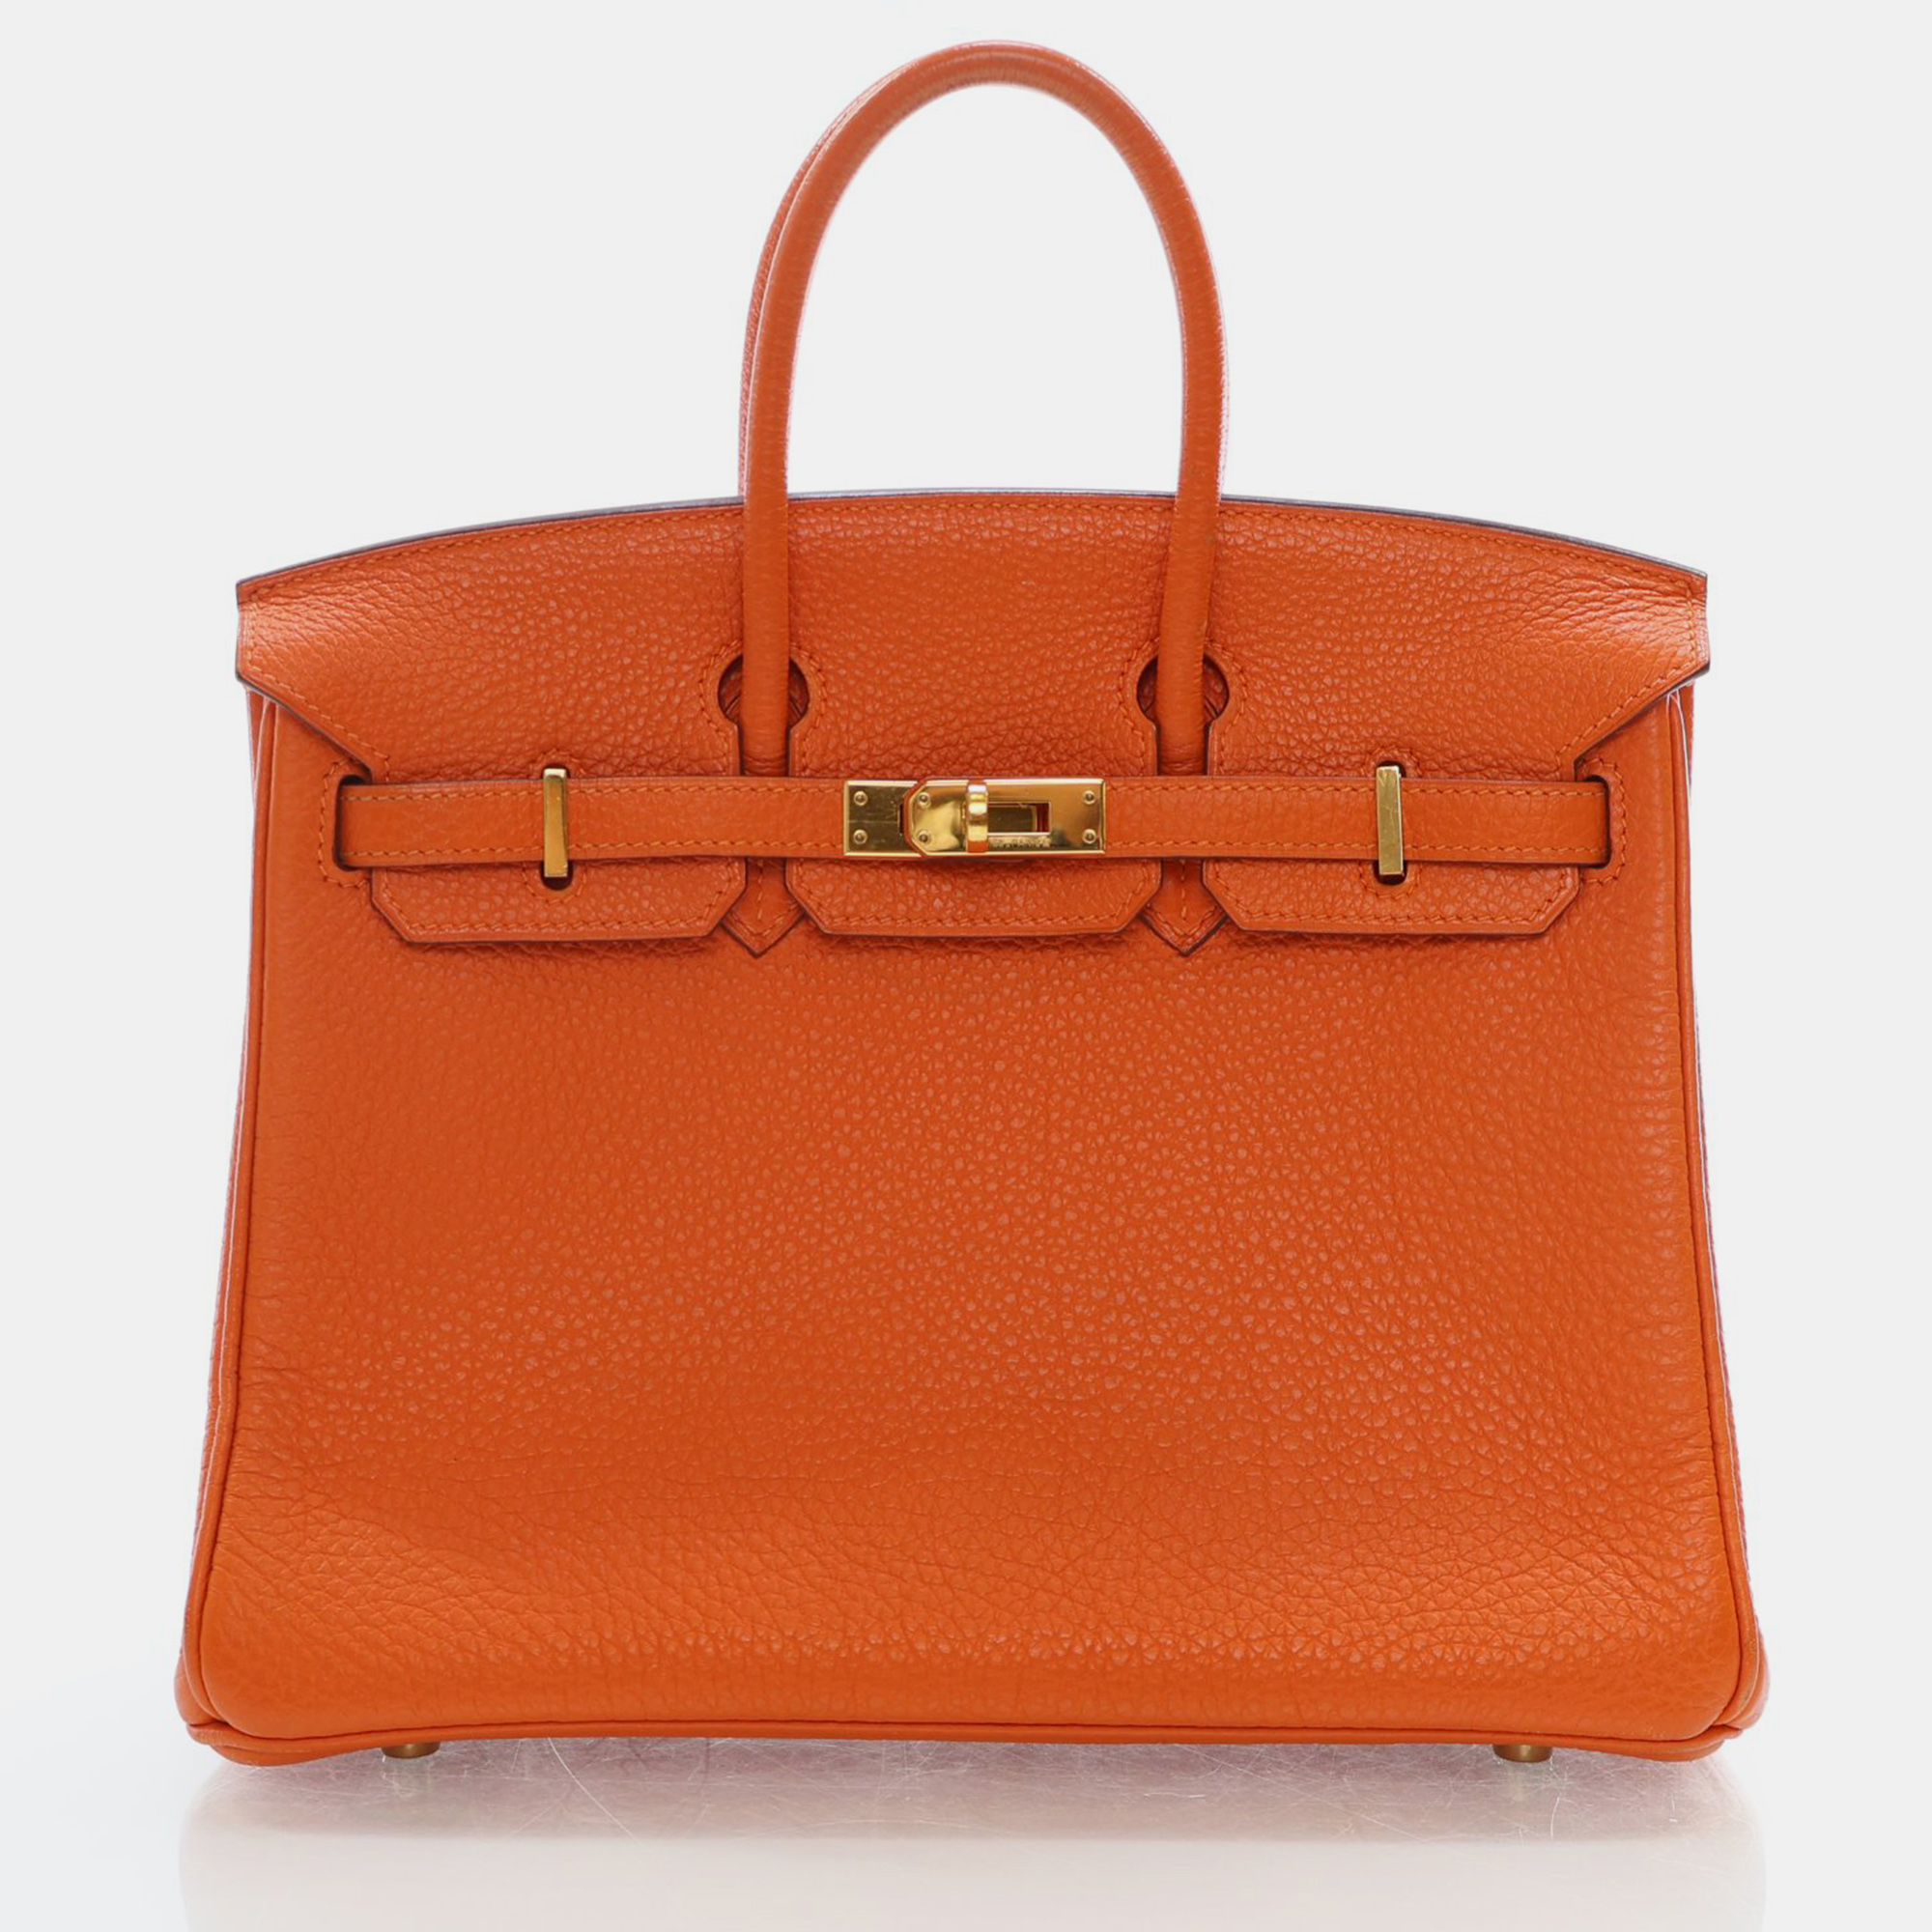 Hermes orange togo ghw birkin 25 handbag